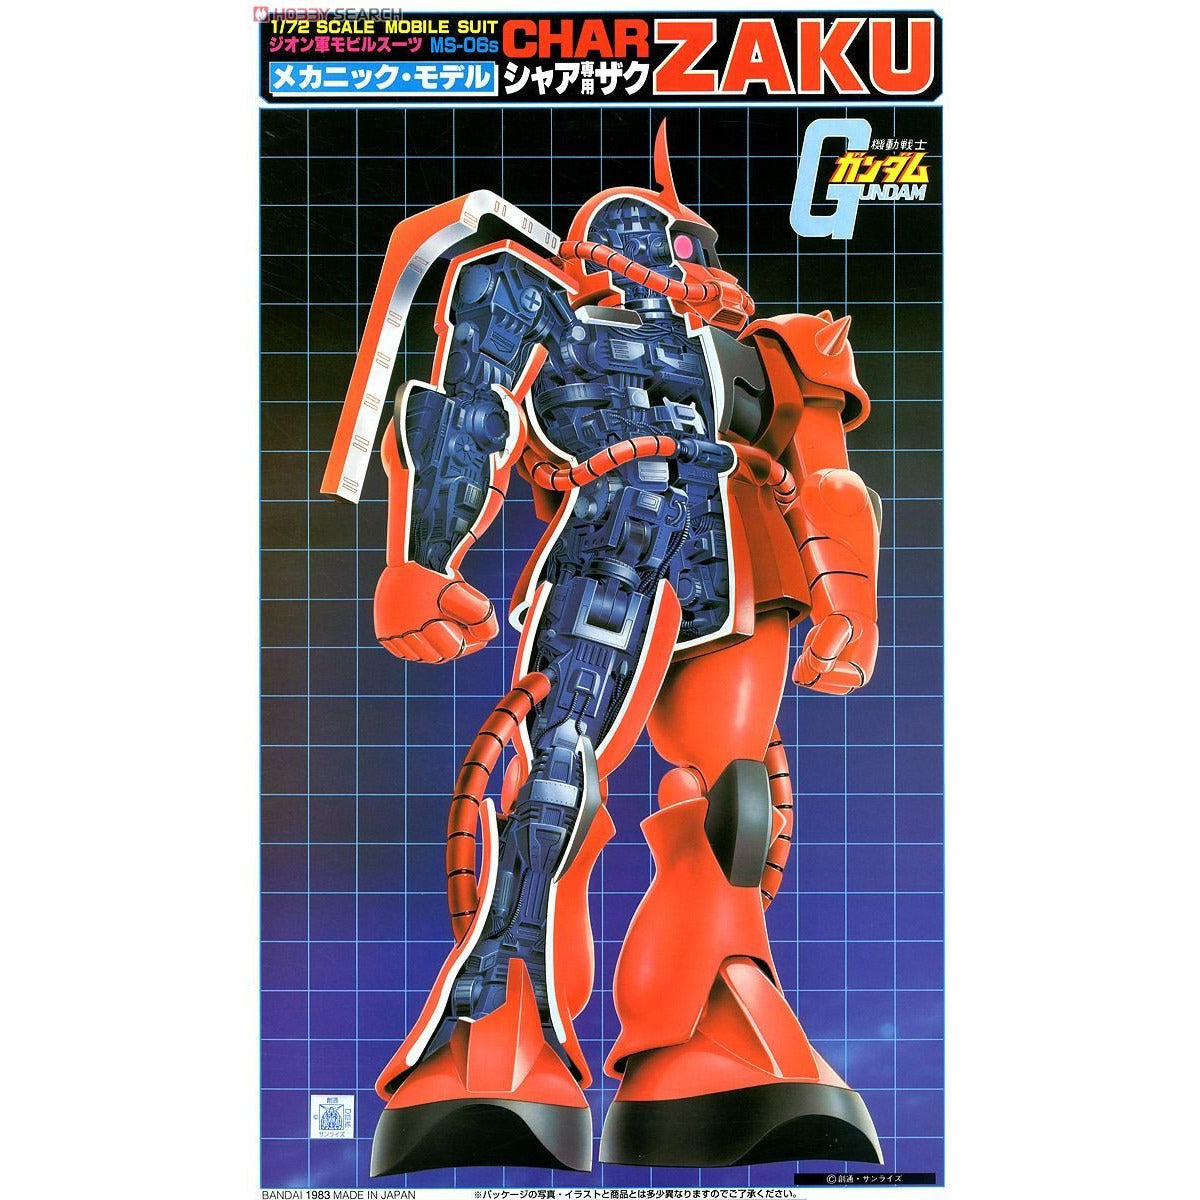 1/72 Mechanic Char's Zaku II (1982)